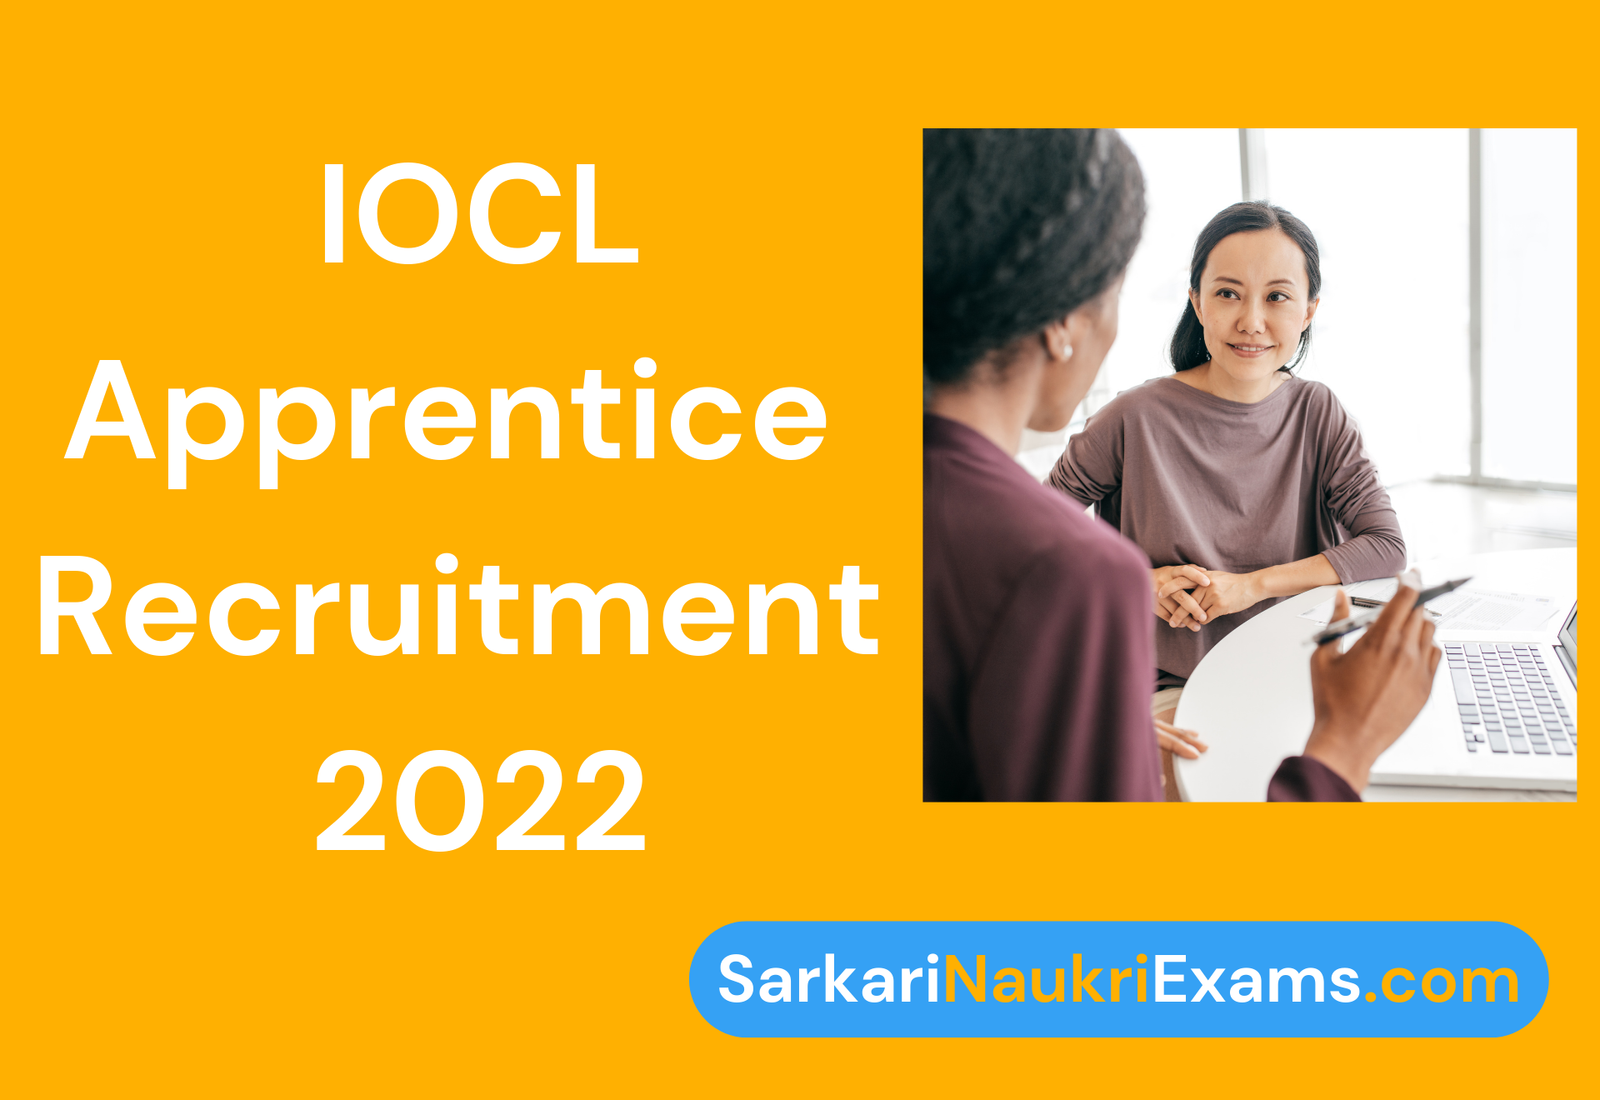 IOCL Apprentice Recruitment Application Form 2022 